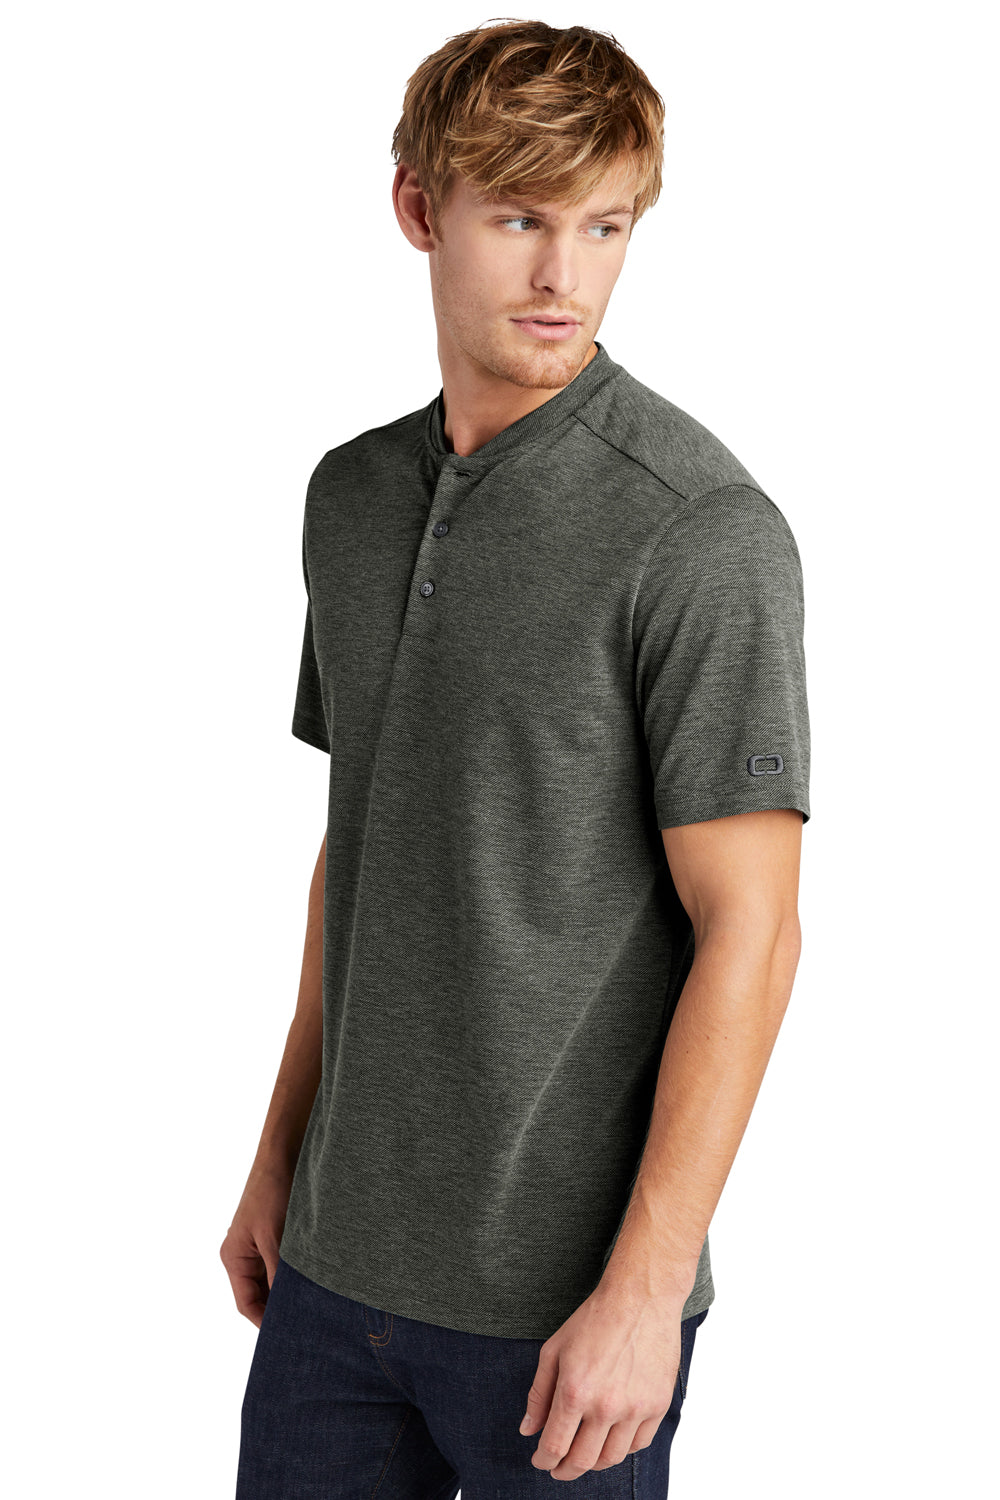 Ogio OG148 Evolution Short Sleeve Henley T-Shirt Tarmac Grey 3Q